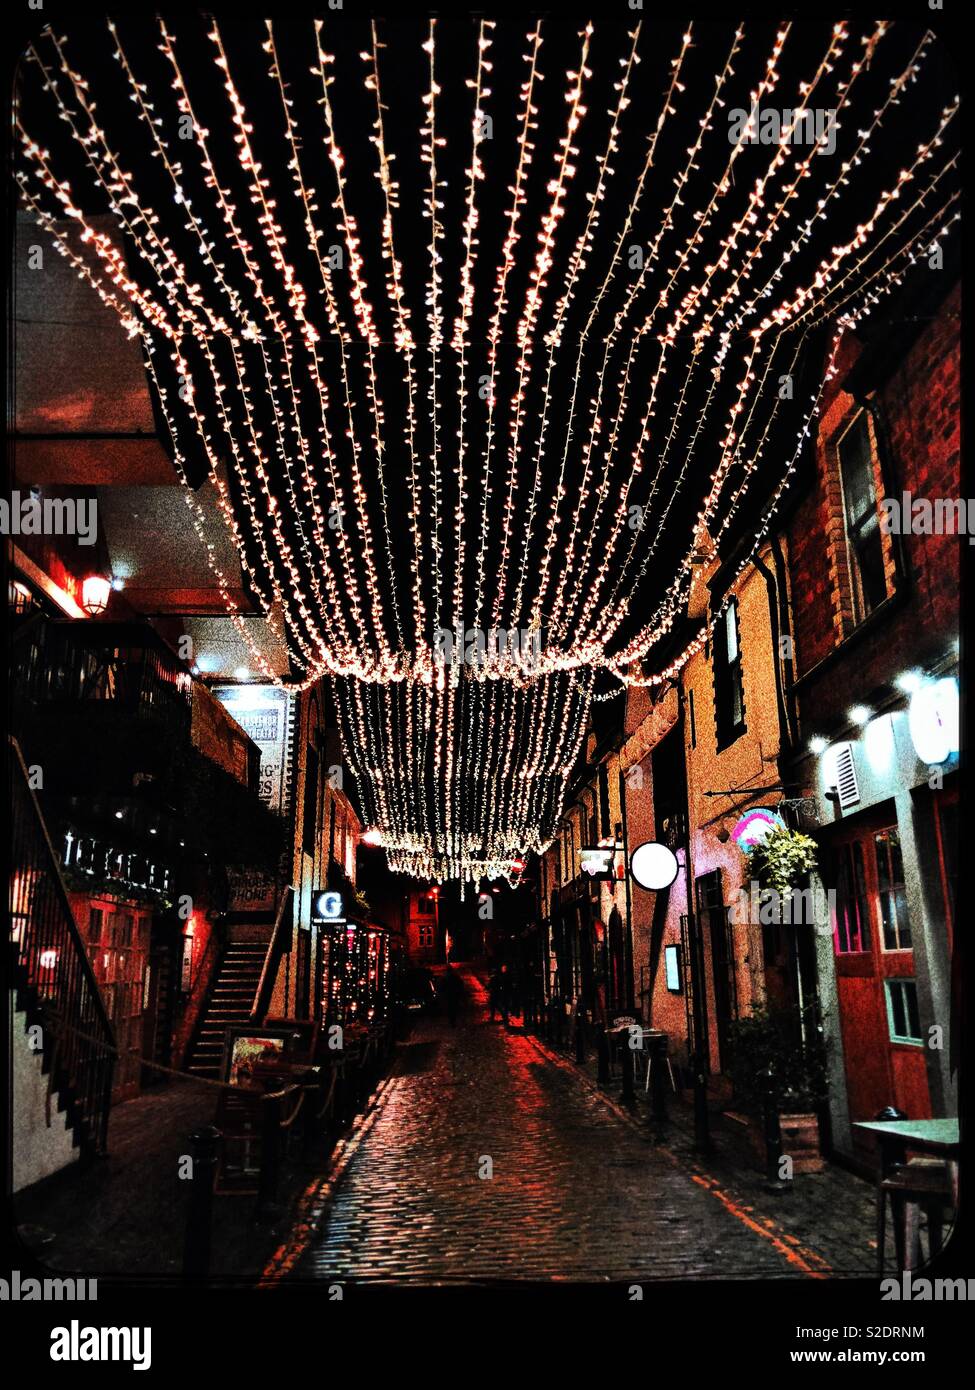 Lights in Ashton Lane, West End of Glasgow Stock Photo - Alamy